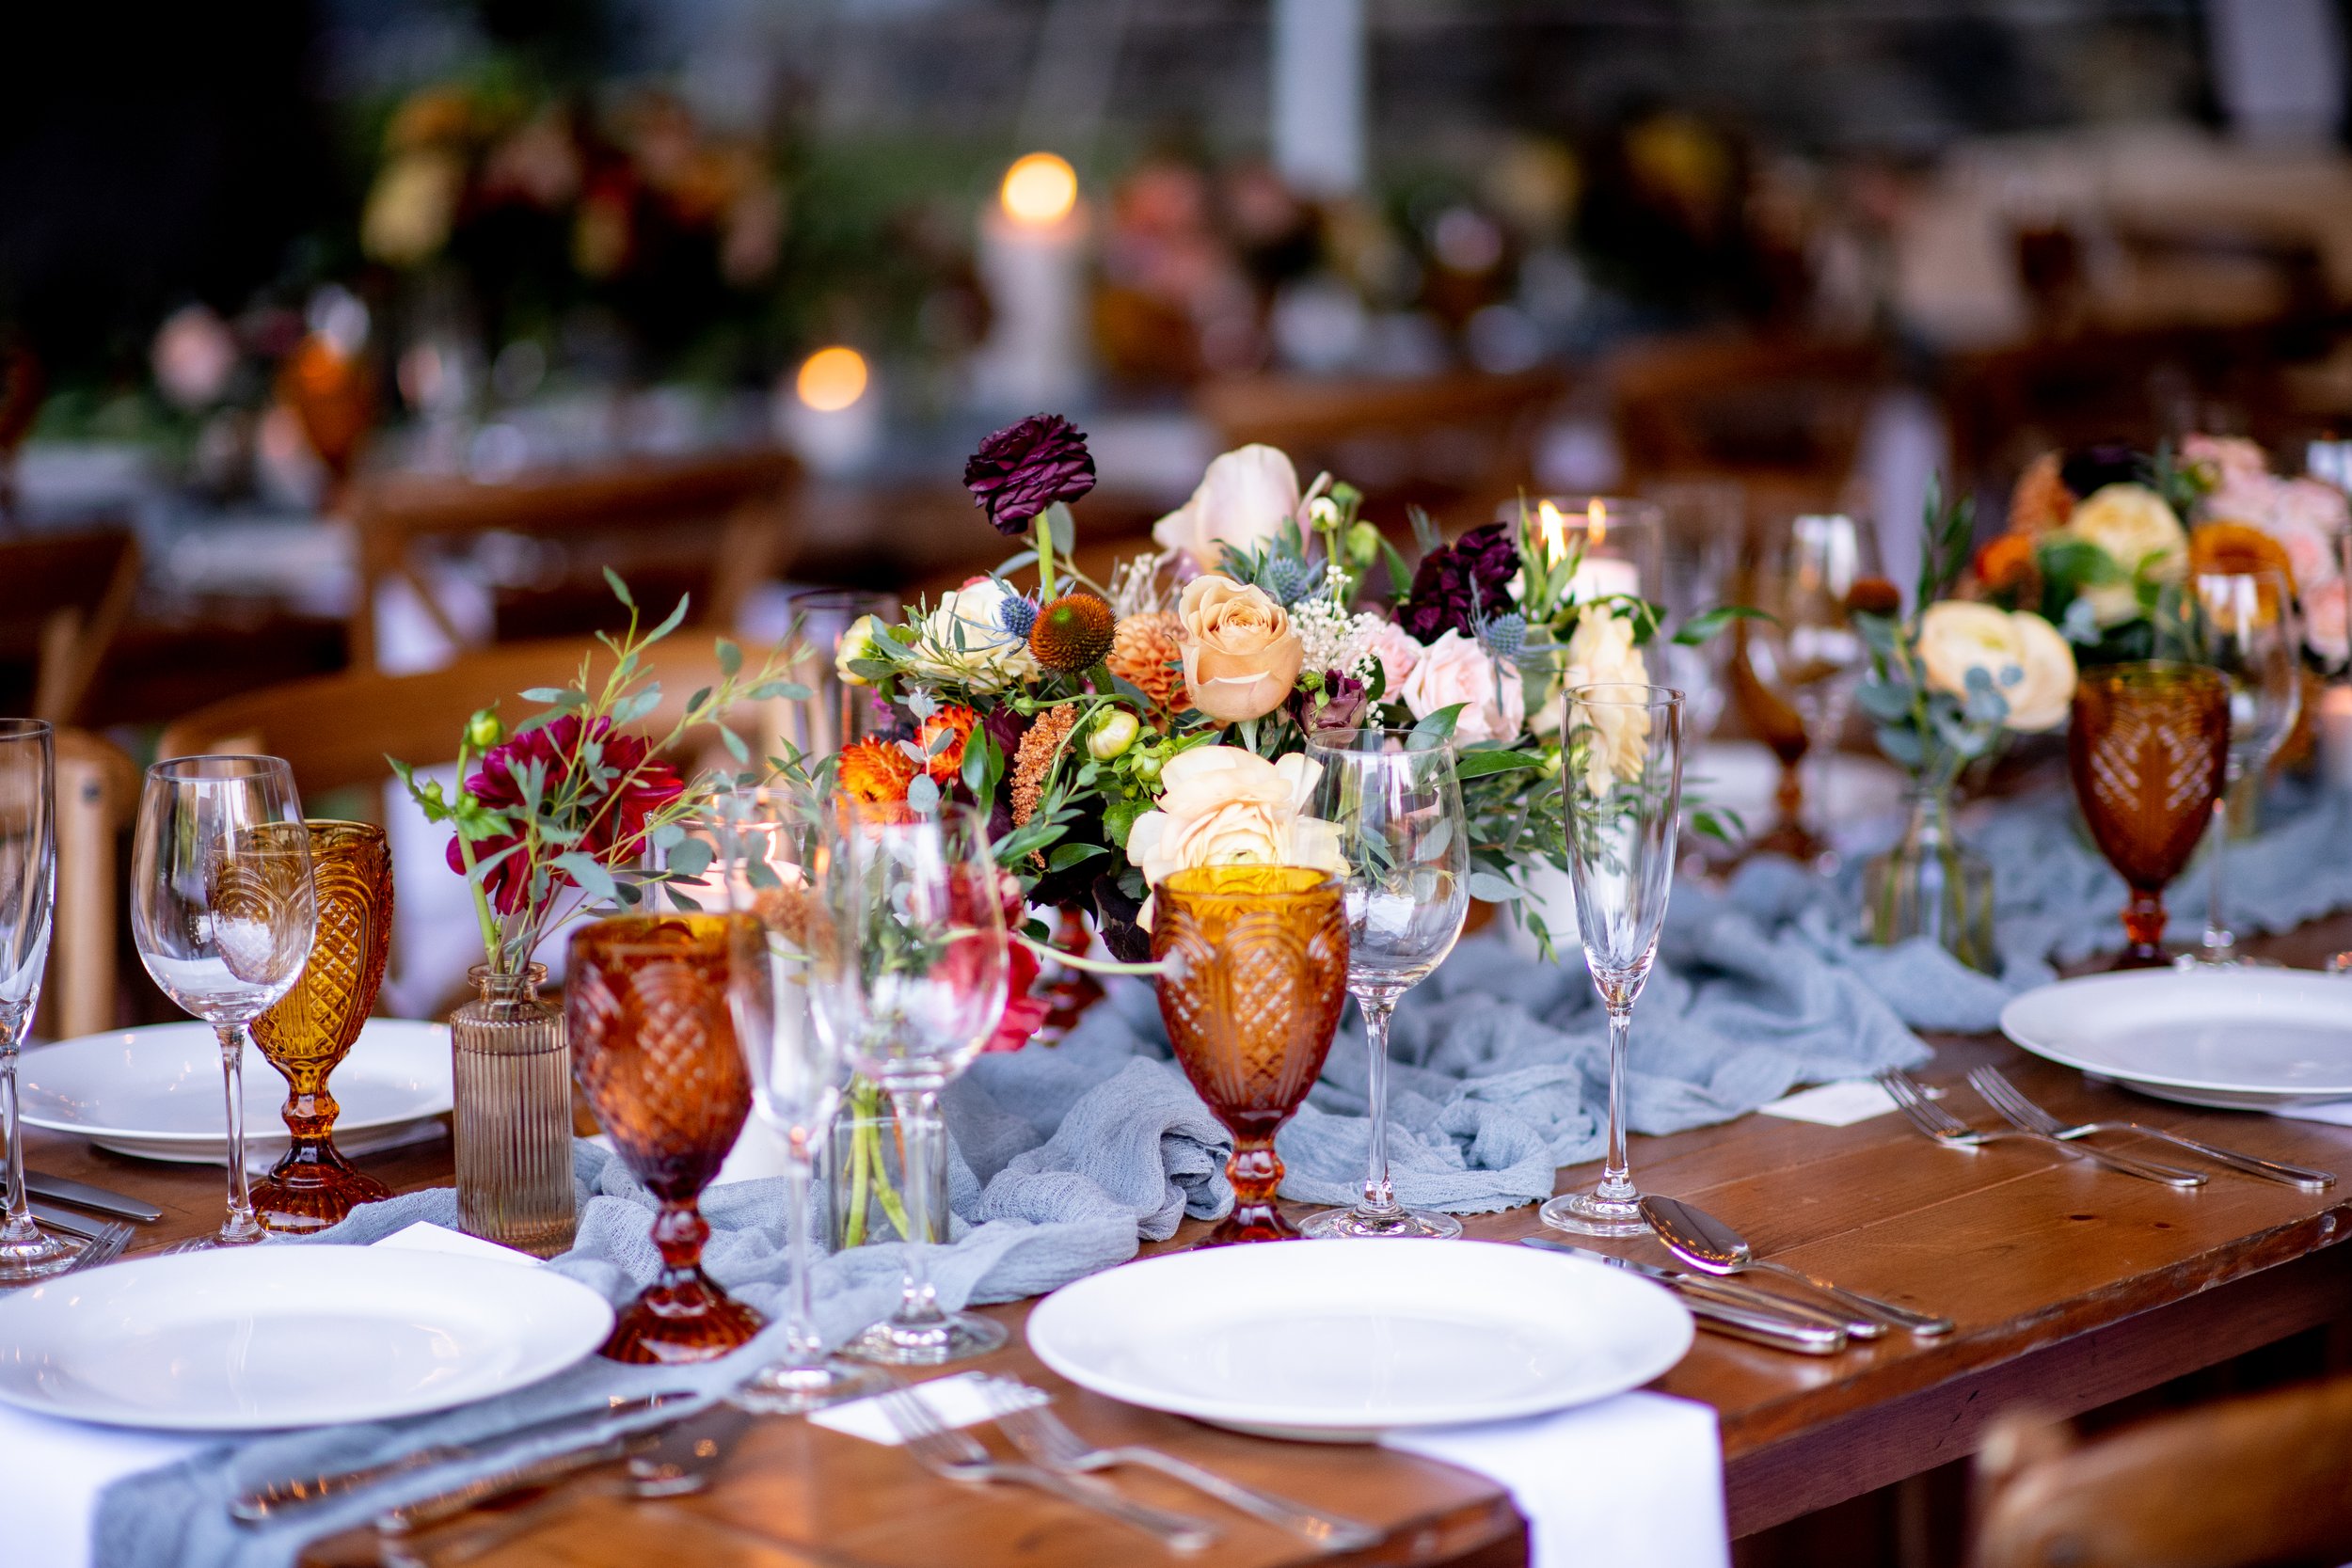  Backyard Wedding, Intimate Wedding, Family Style, Farm Table, Blue Runner, Amber Goblets, Dahlia Bud Vases 